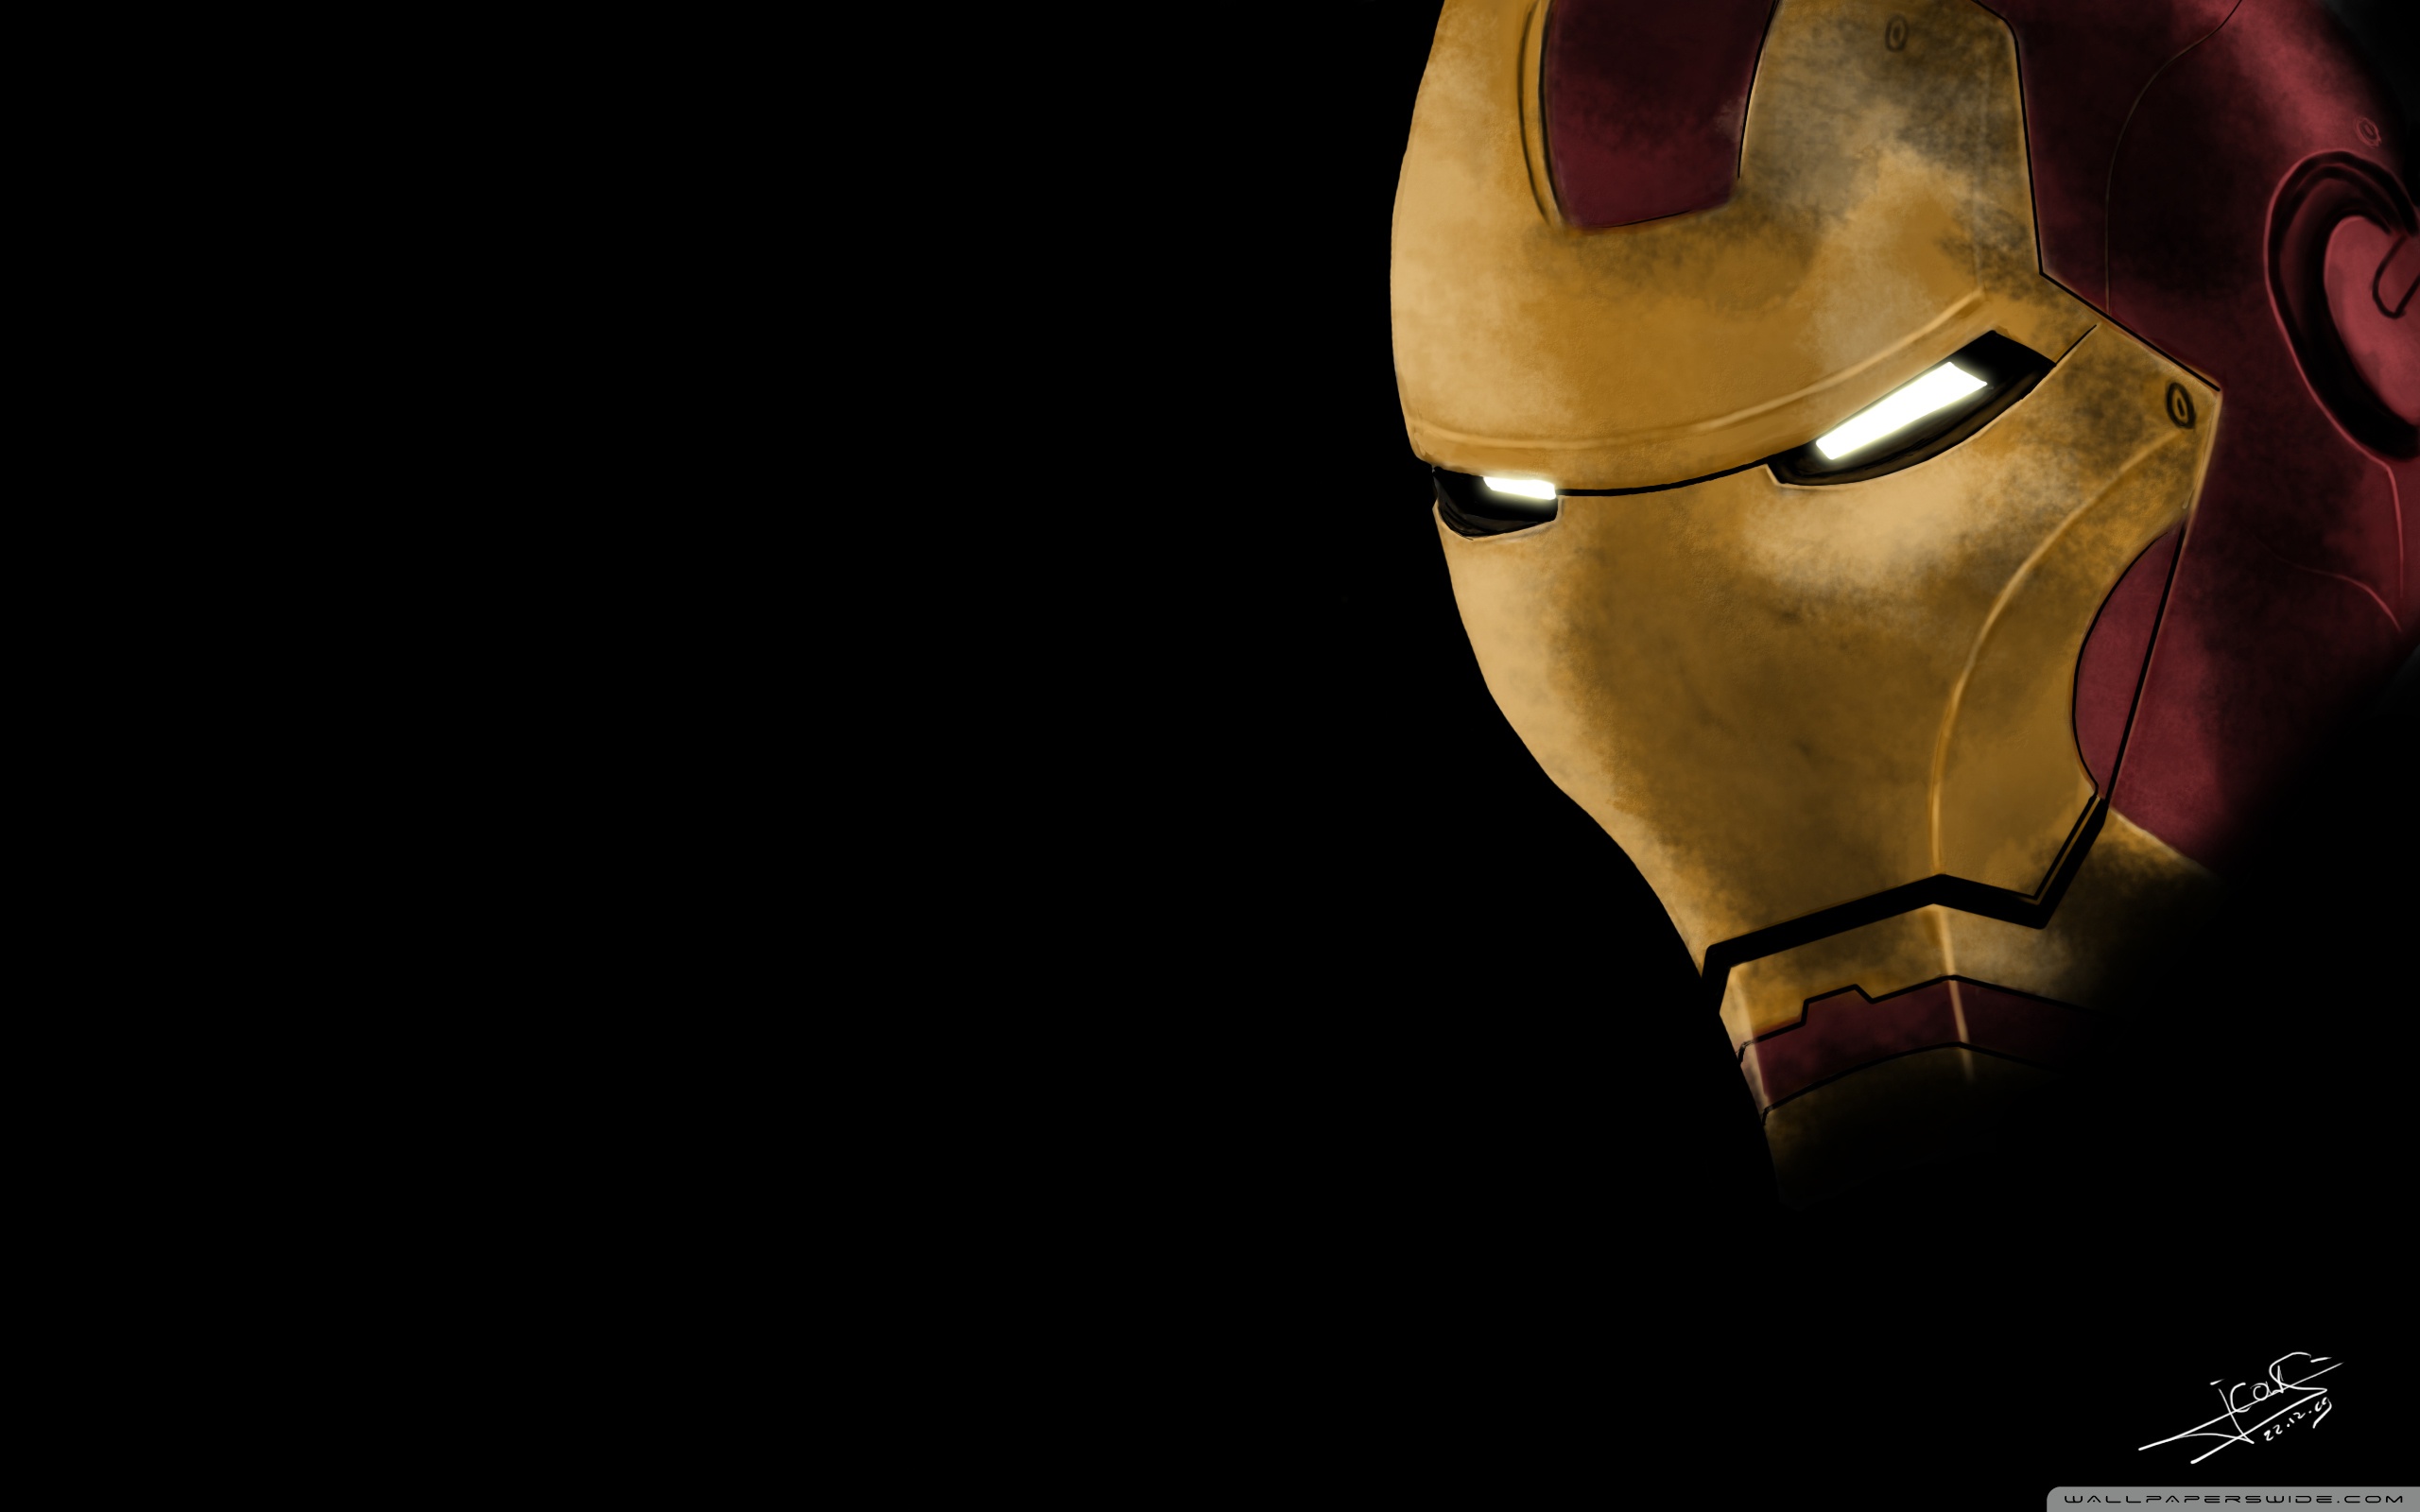 Iron Man 3 Wallpaper Hd